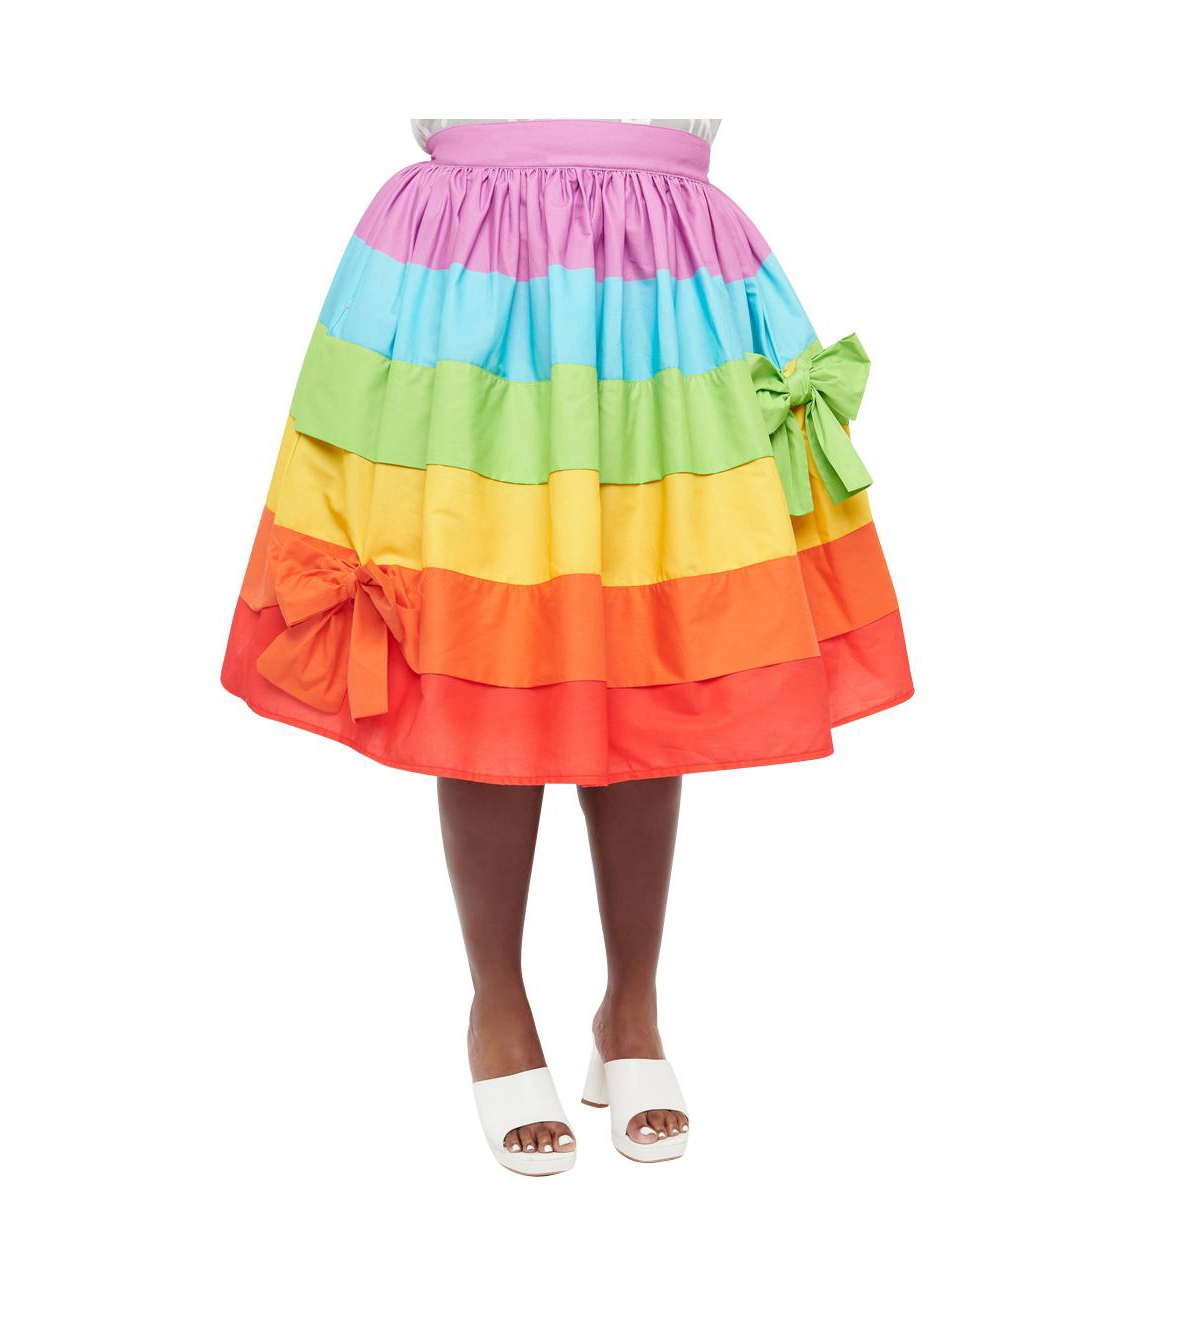 Plus Size 1950s Gellar Swing Skirt - Rainbow stripe